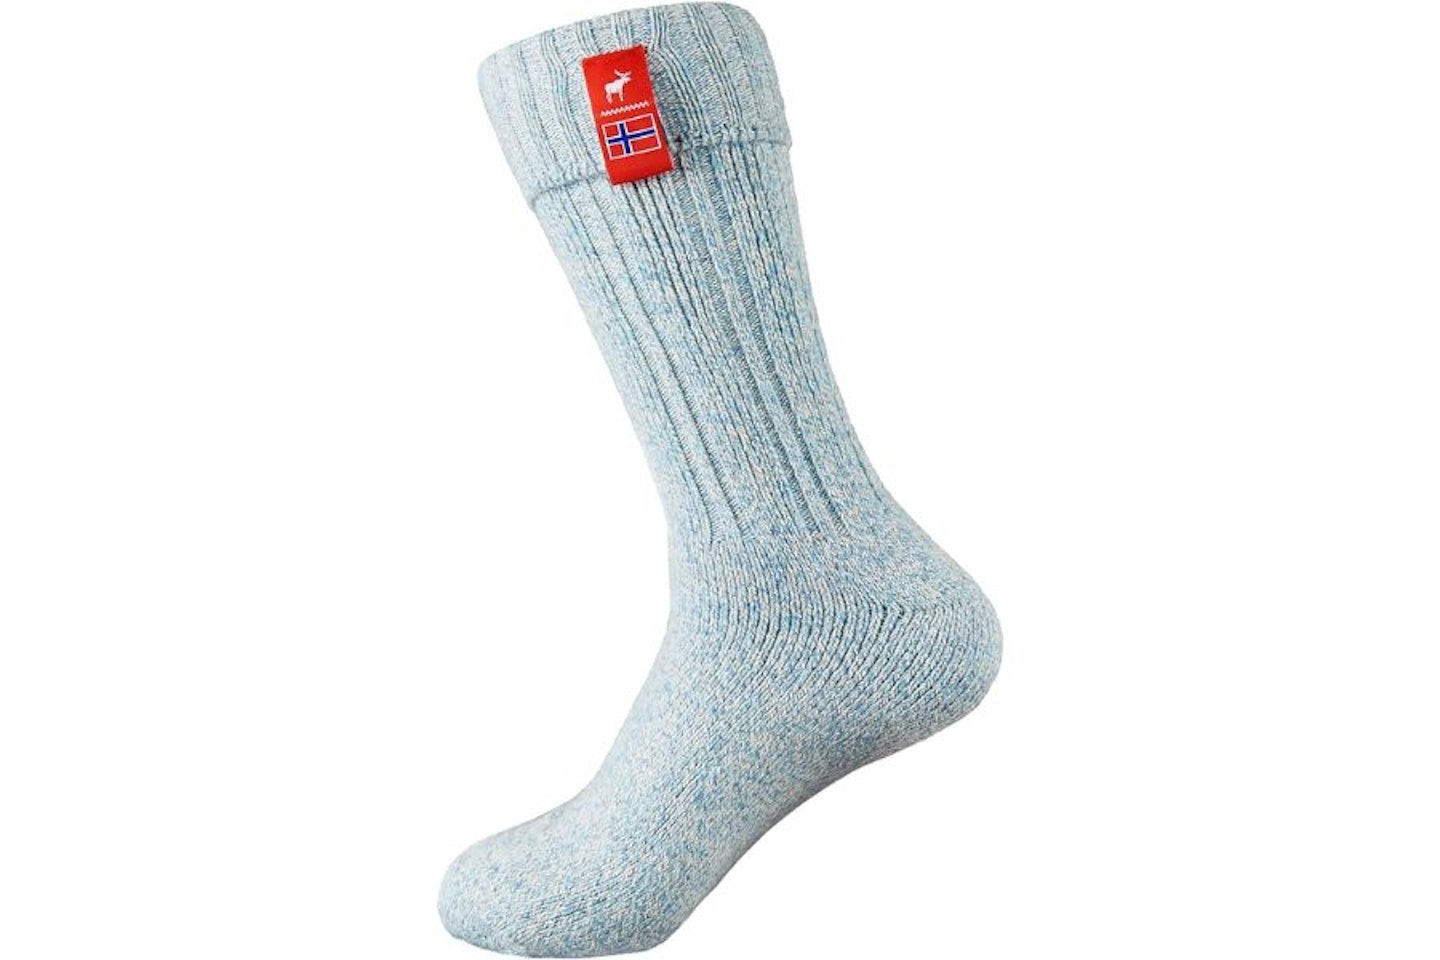 The Nordic Sock Company Norwegian Fjord Socks